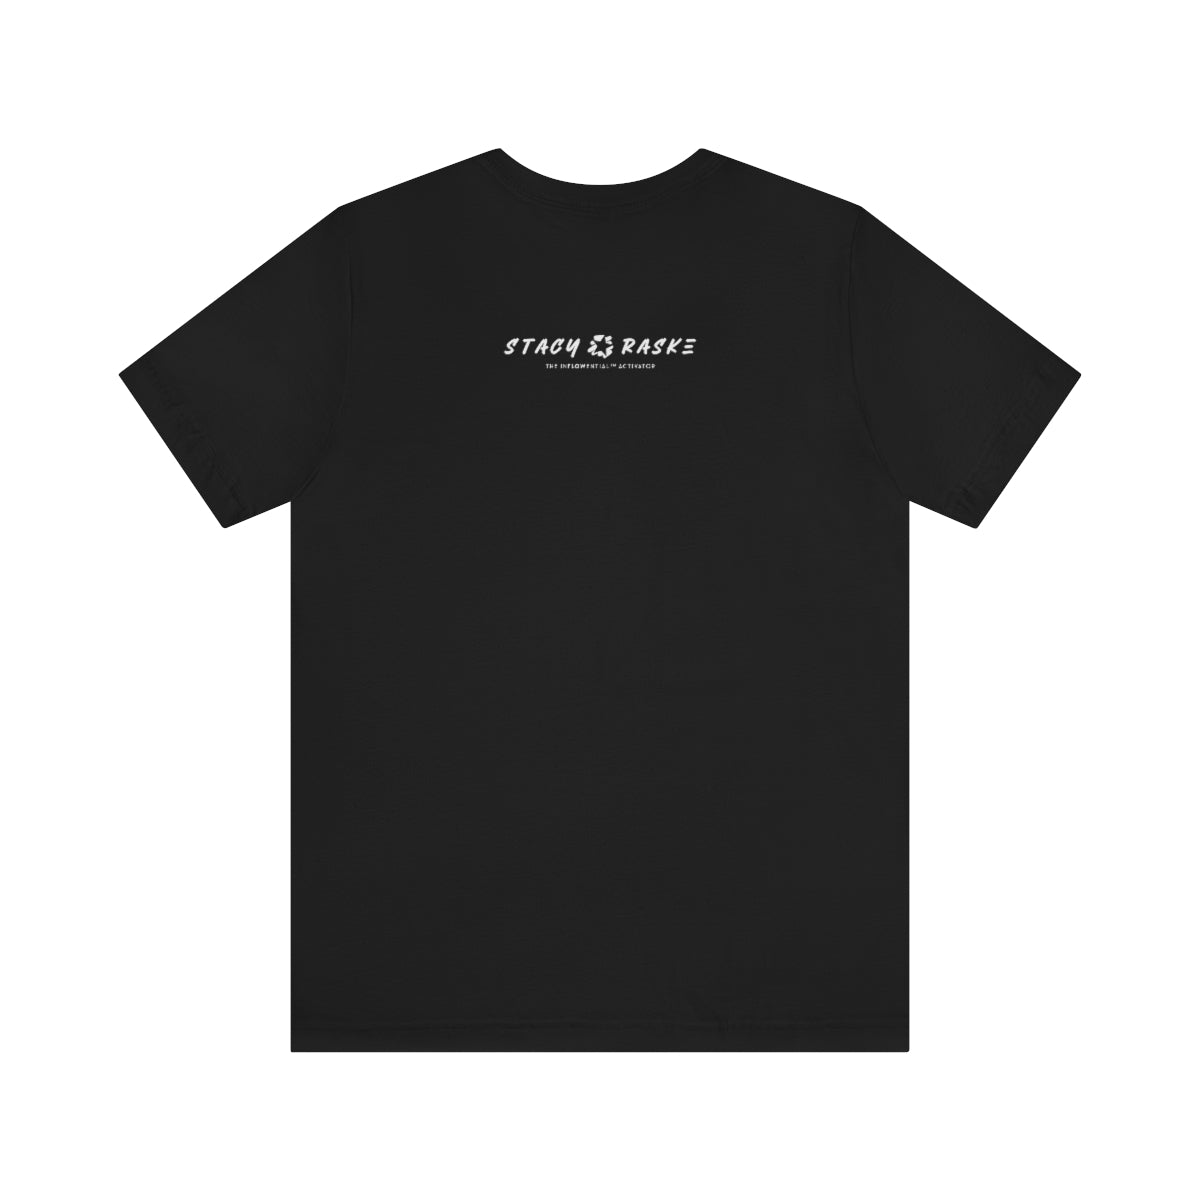 Harmony T-Shirt Black